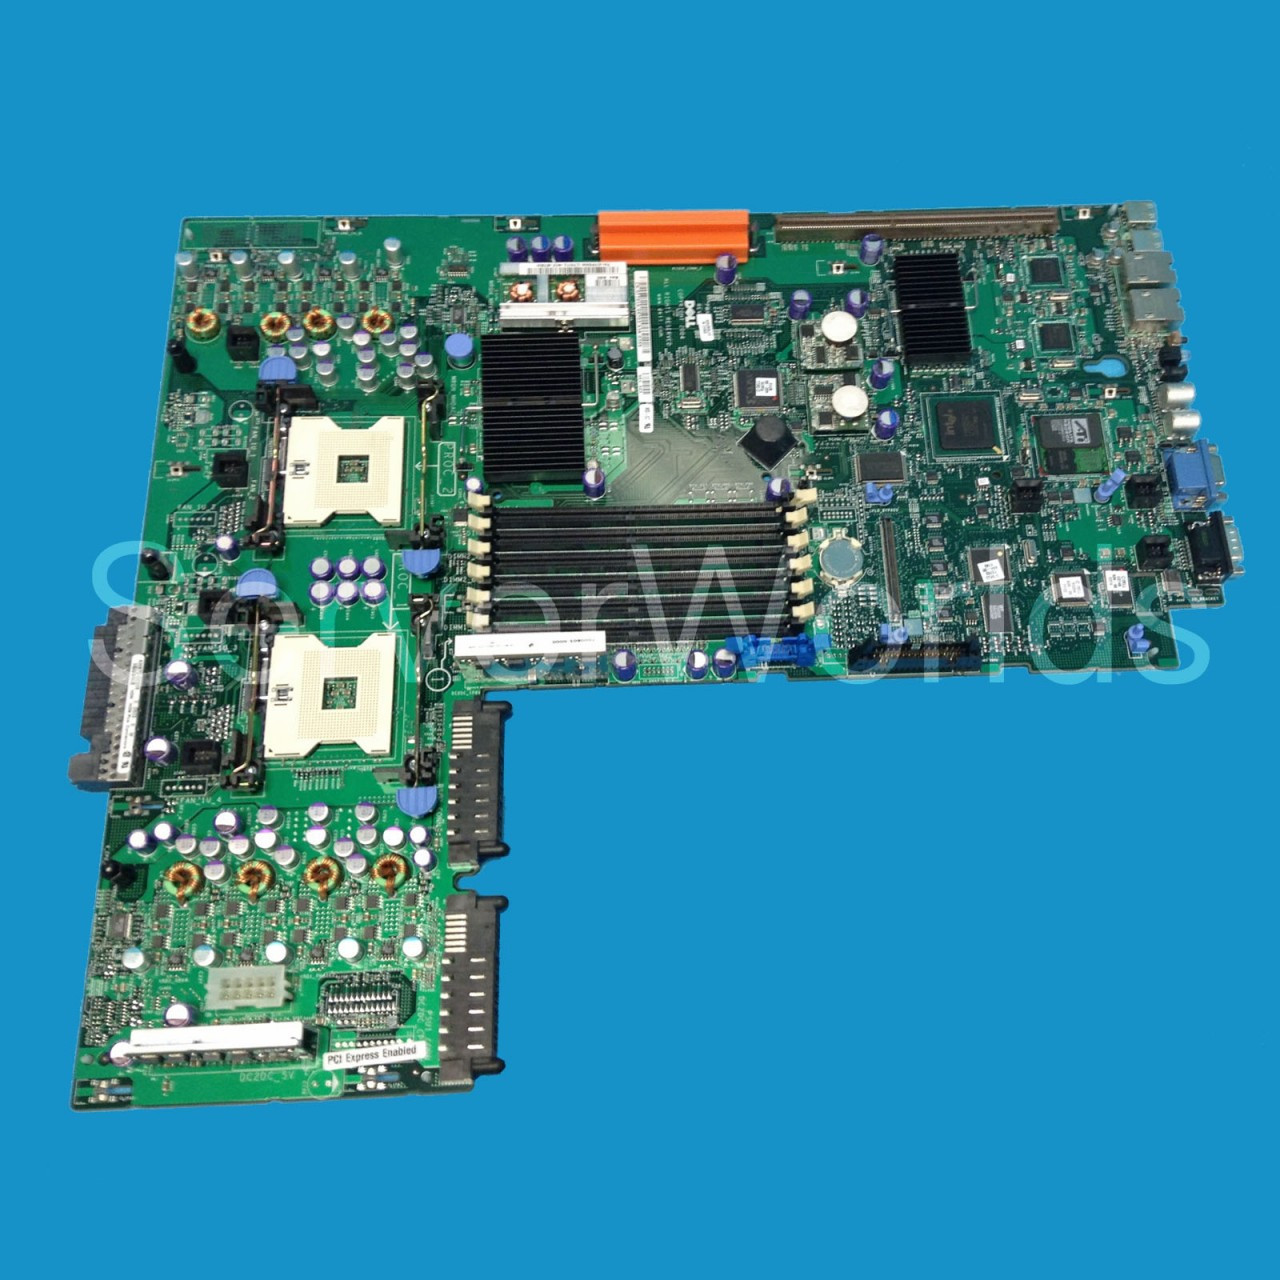 Dell T7916 Poweredge 2800 2850 System Board